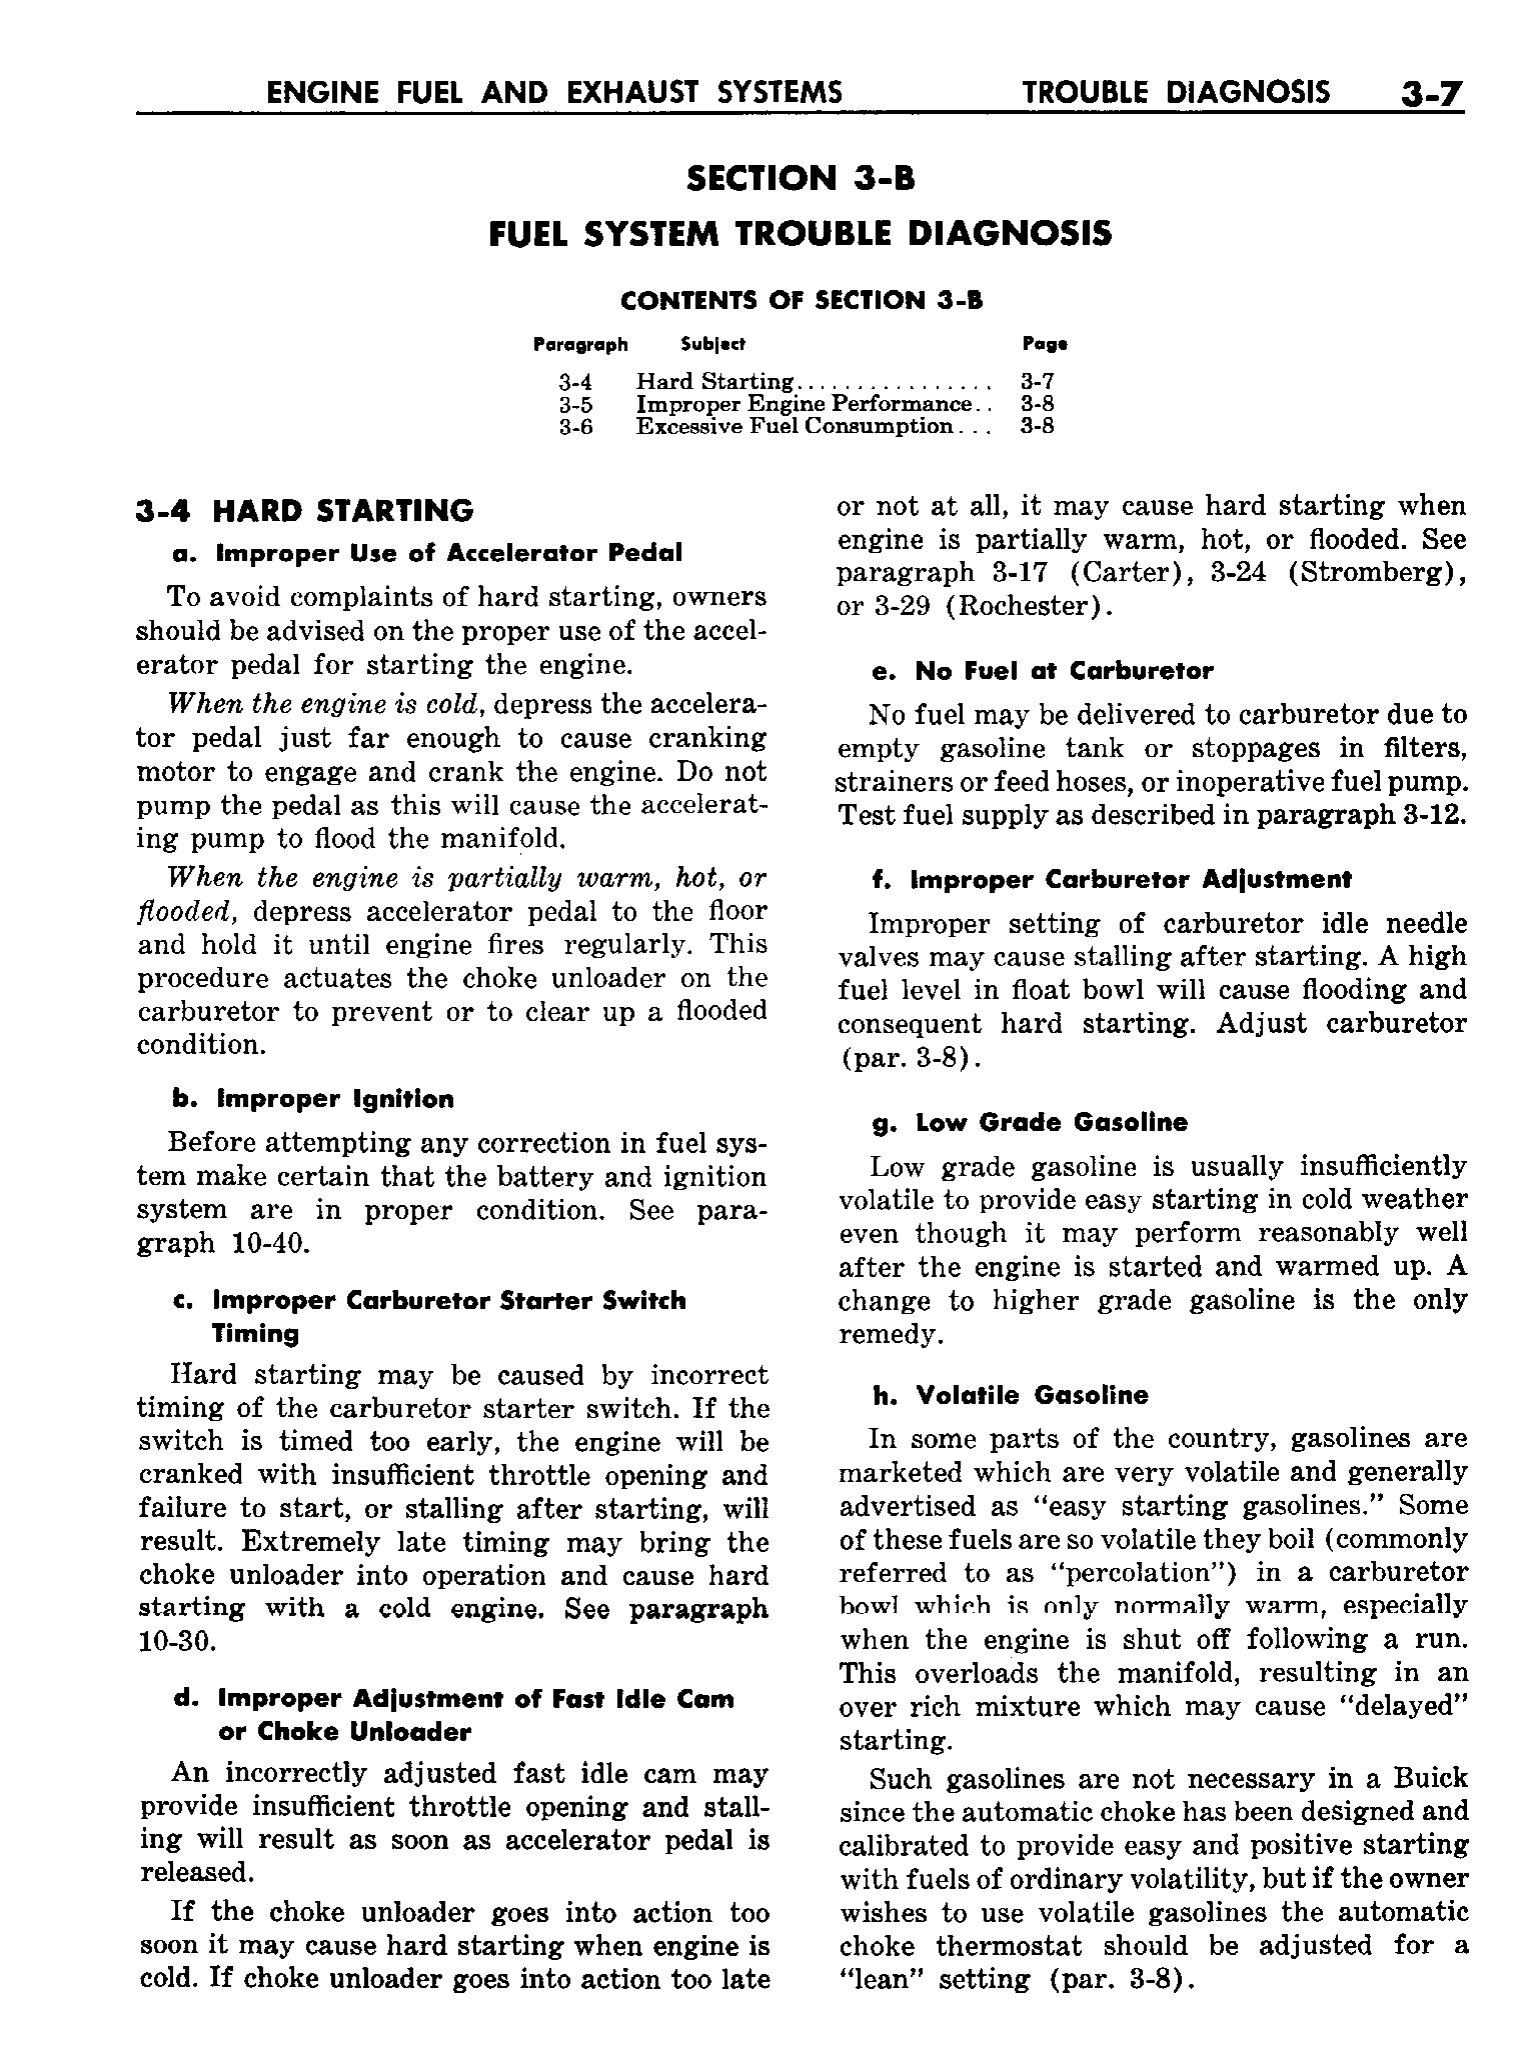 n_04 1958 Buick Shop Manual - Engine Fuel & Exhaust_7.jpg